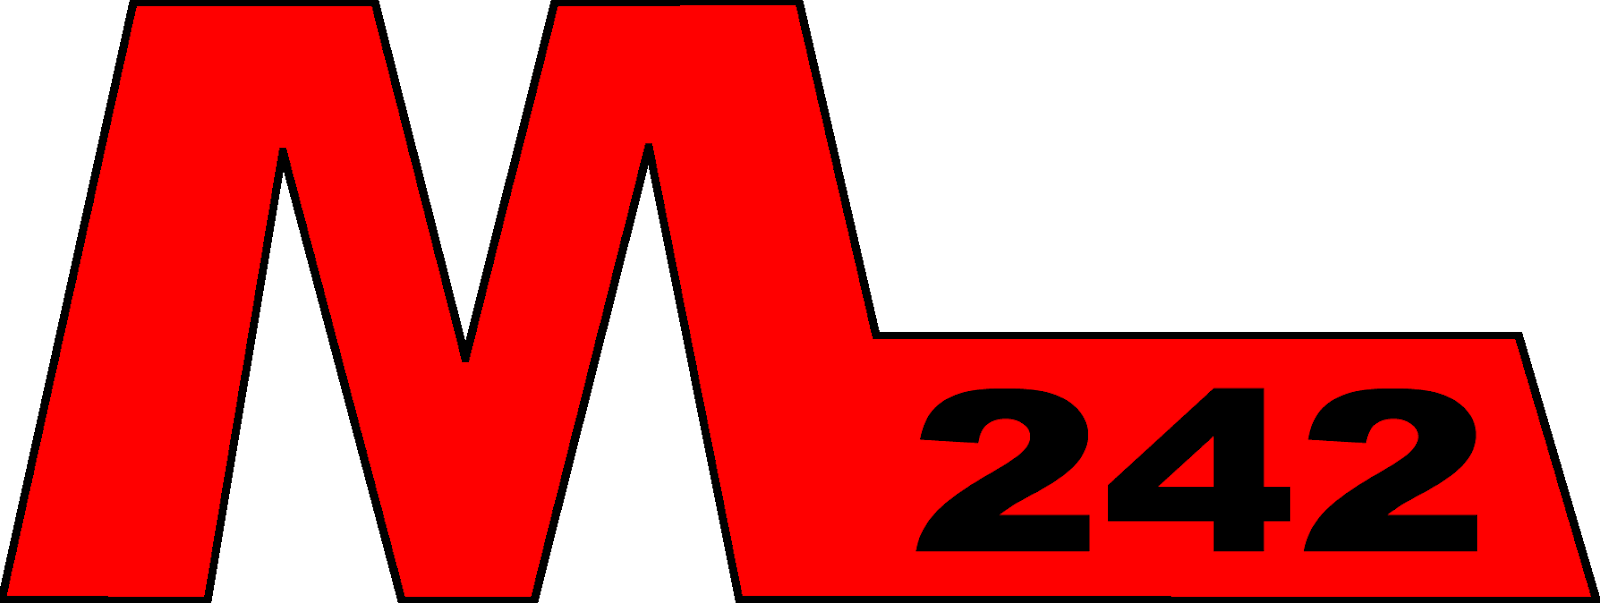 M242_logo_original.png